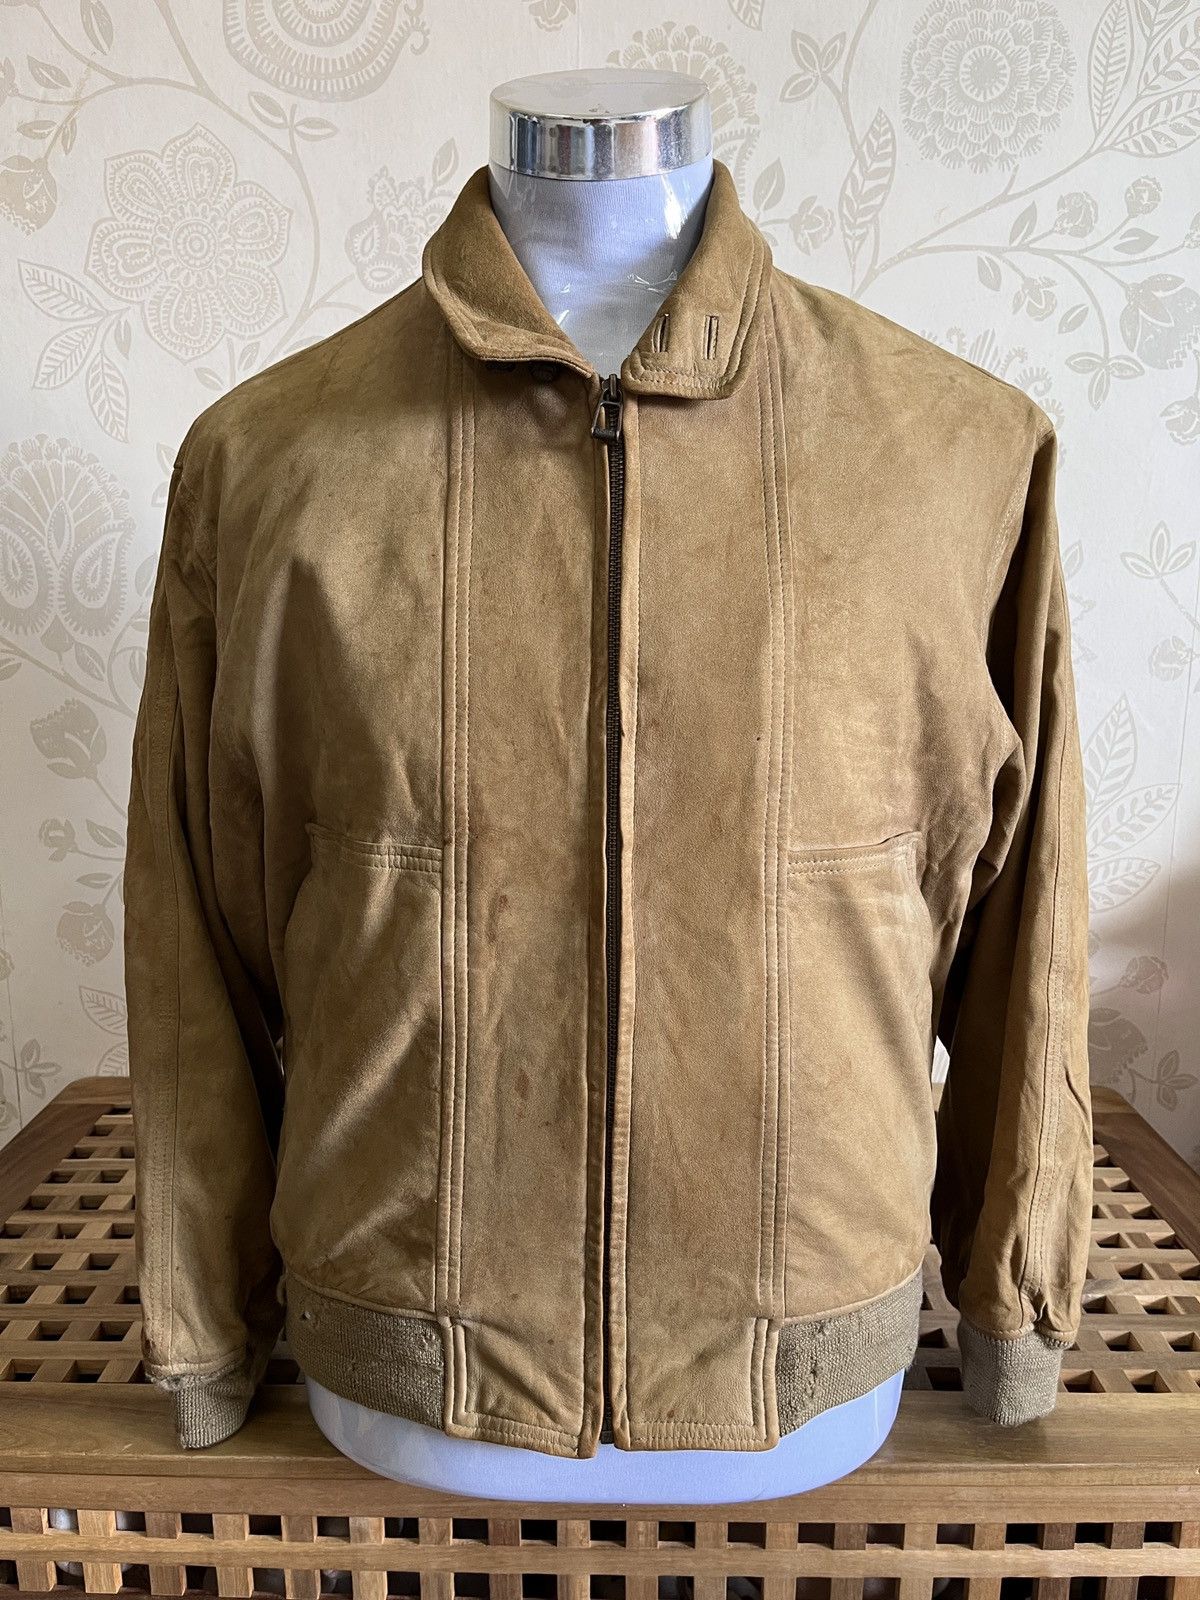 Bjorn Borg Rare Genuine Leather Ripped Jacket Vintage 80s - 17